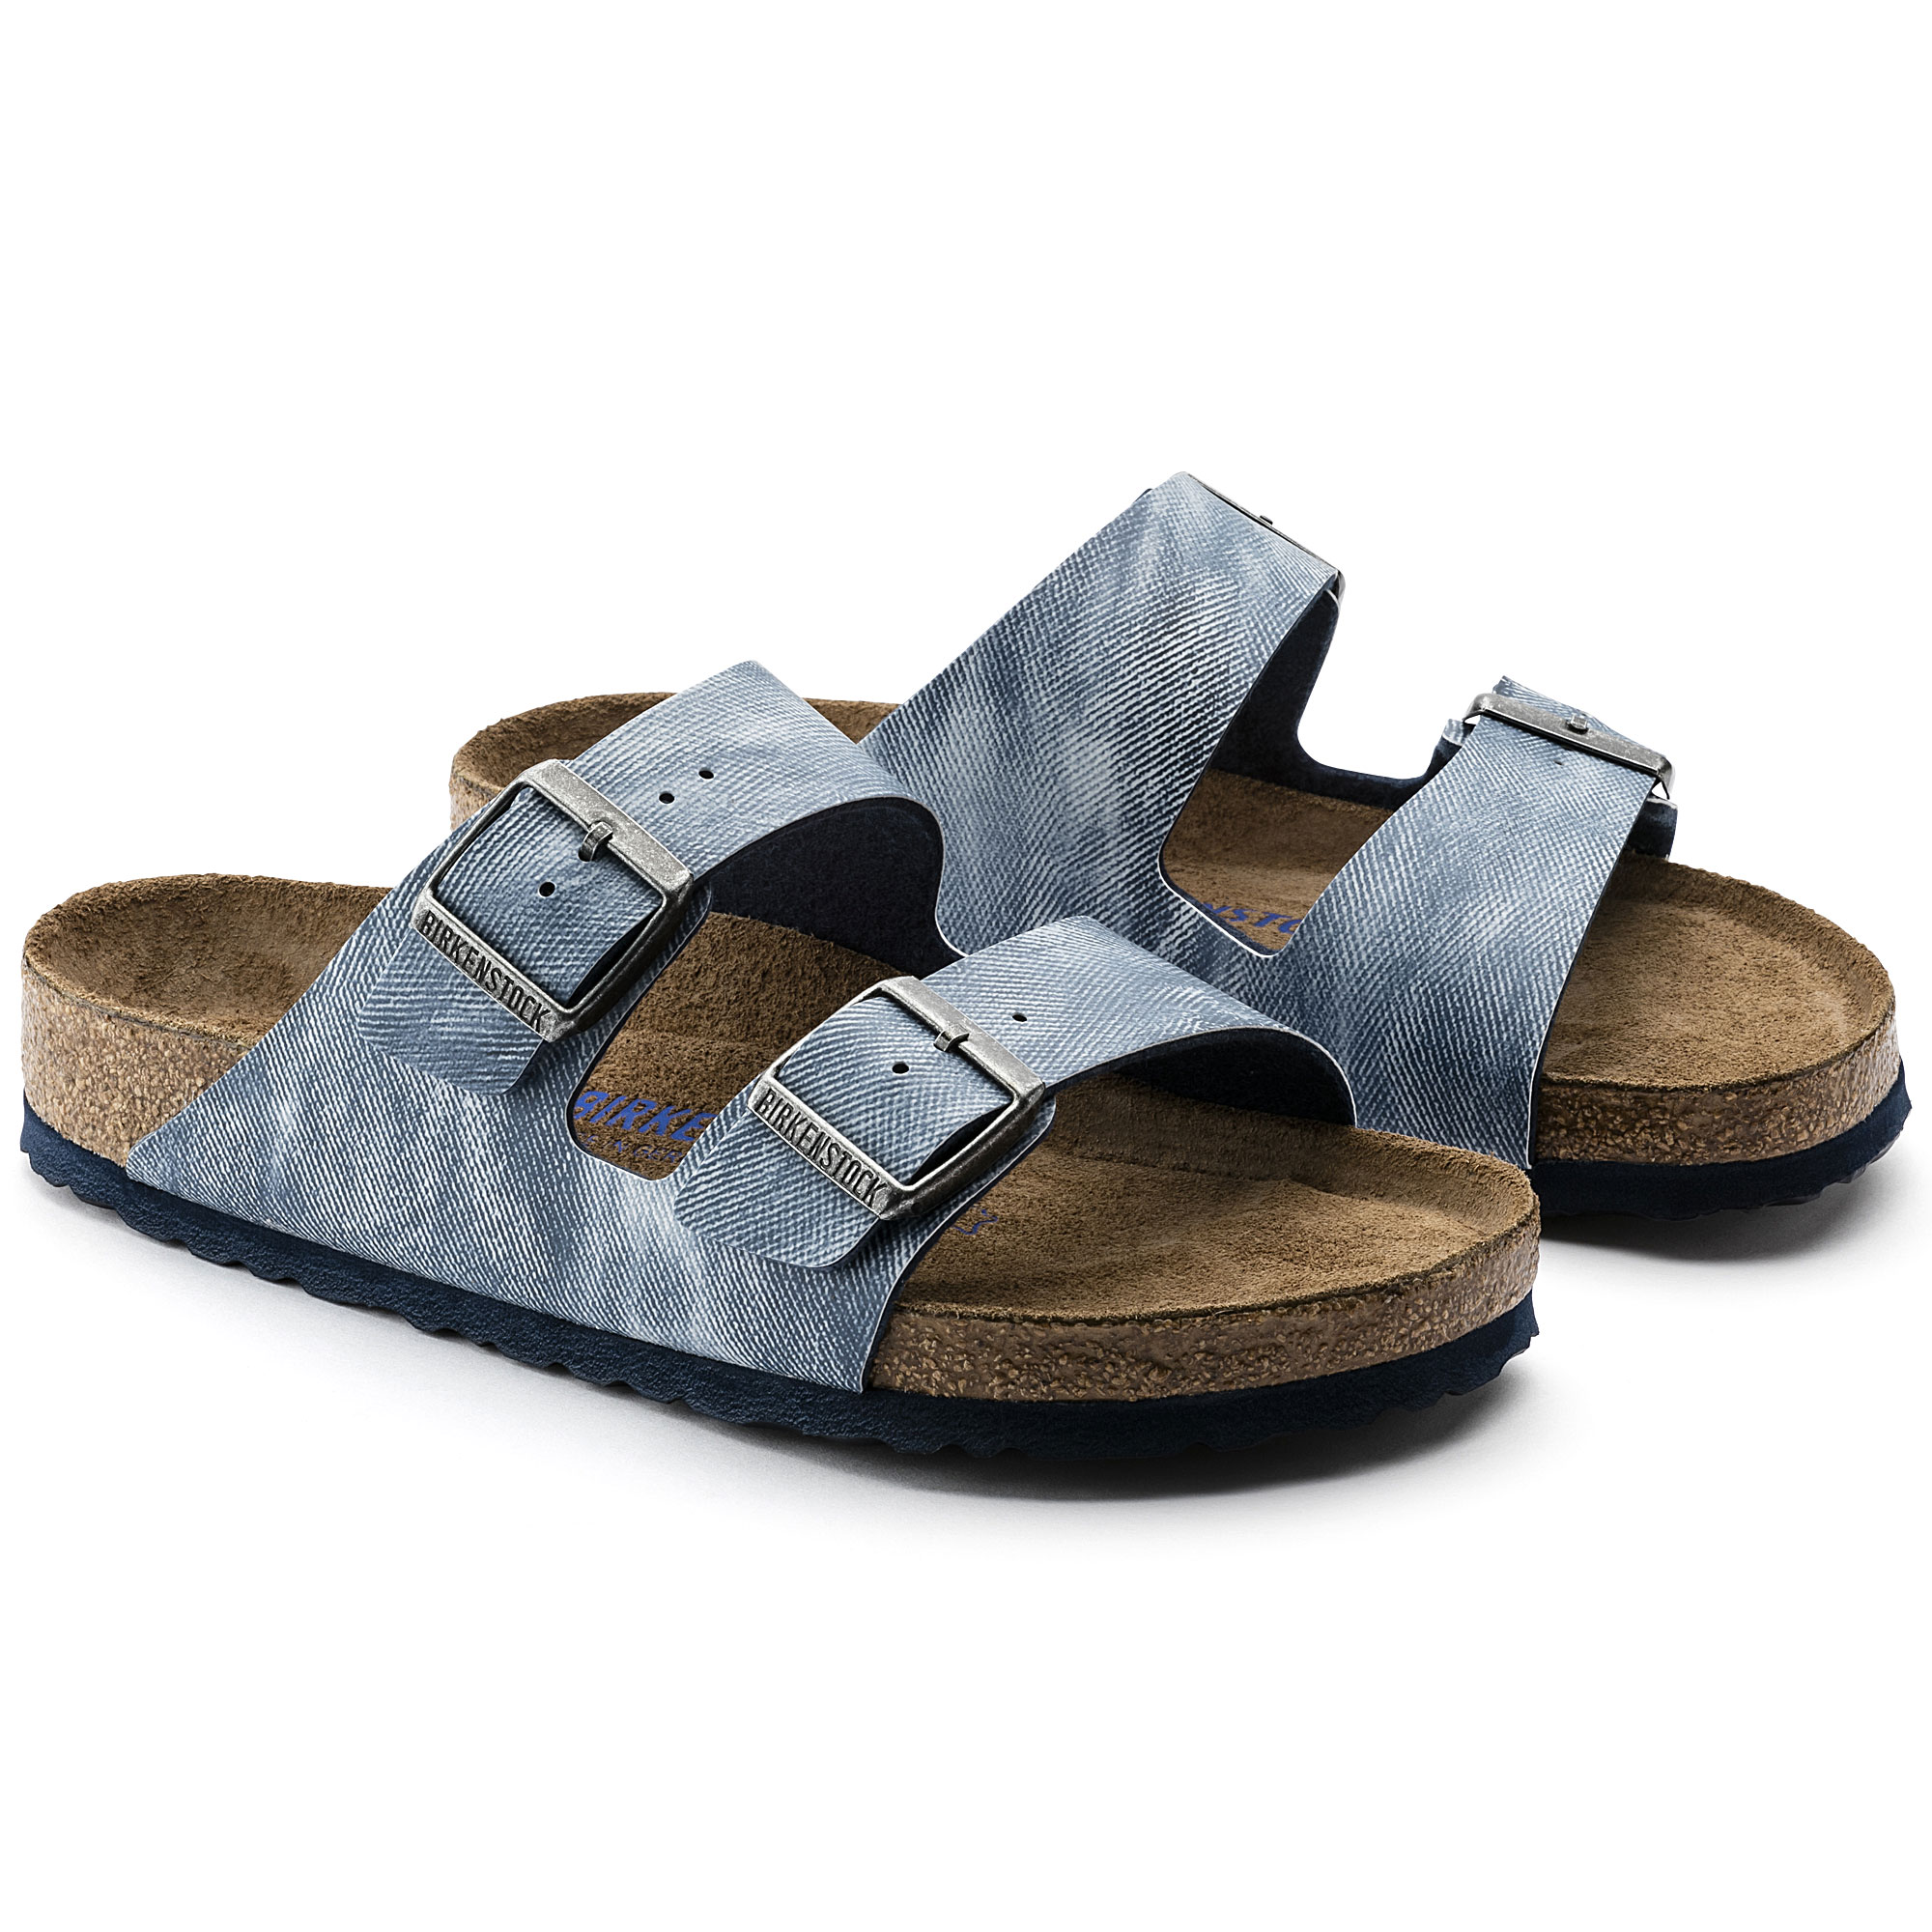 arizona jeans sandals